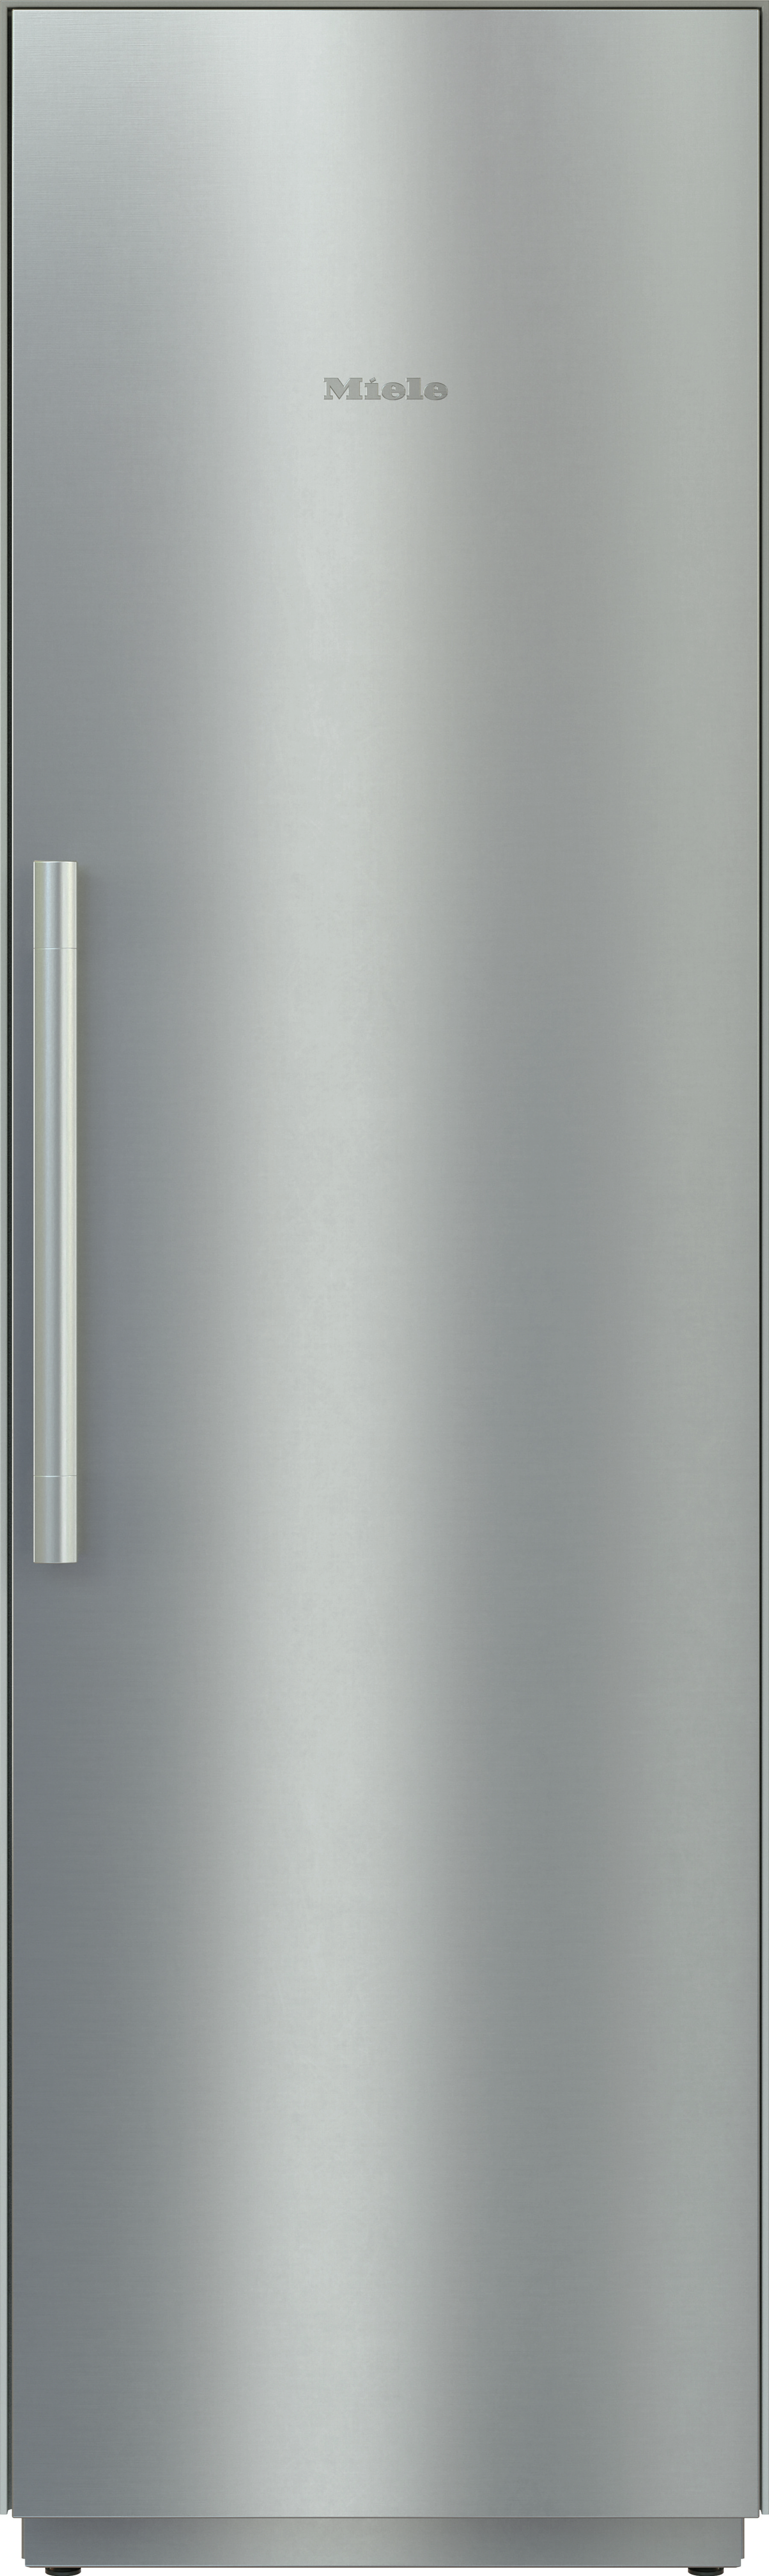 Miele 24 Inch MasterCool 24 Built In Counter Depth Column Refrigerator K2602VI